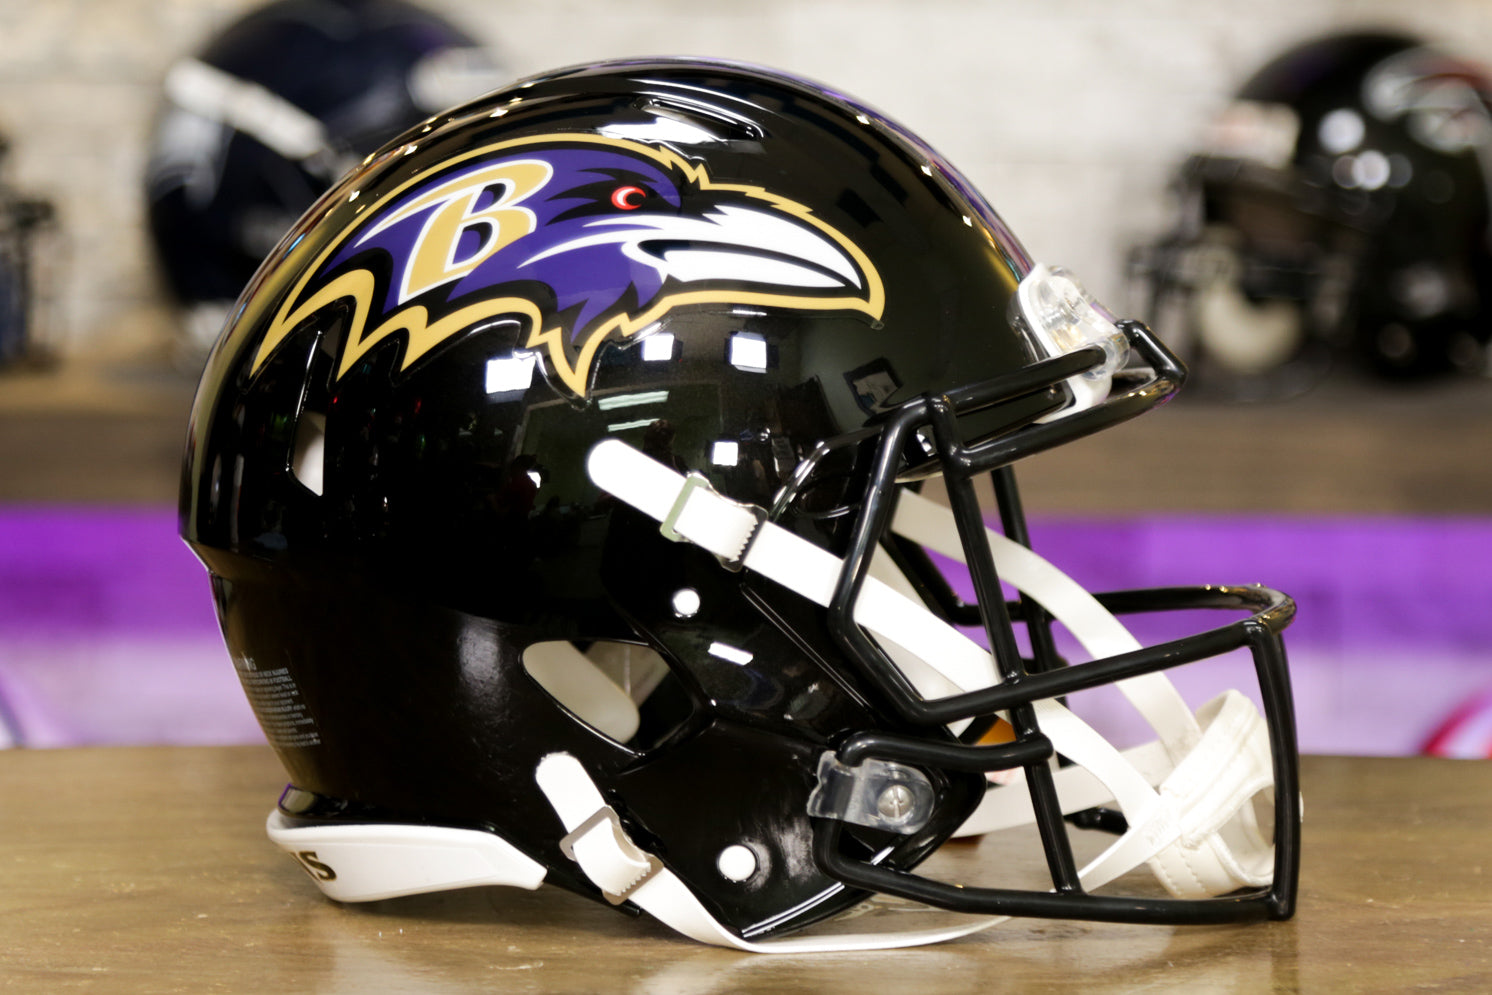 Baltimore Ravens: 2022 Outdoor Helmet - Officially Licensed NFL